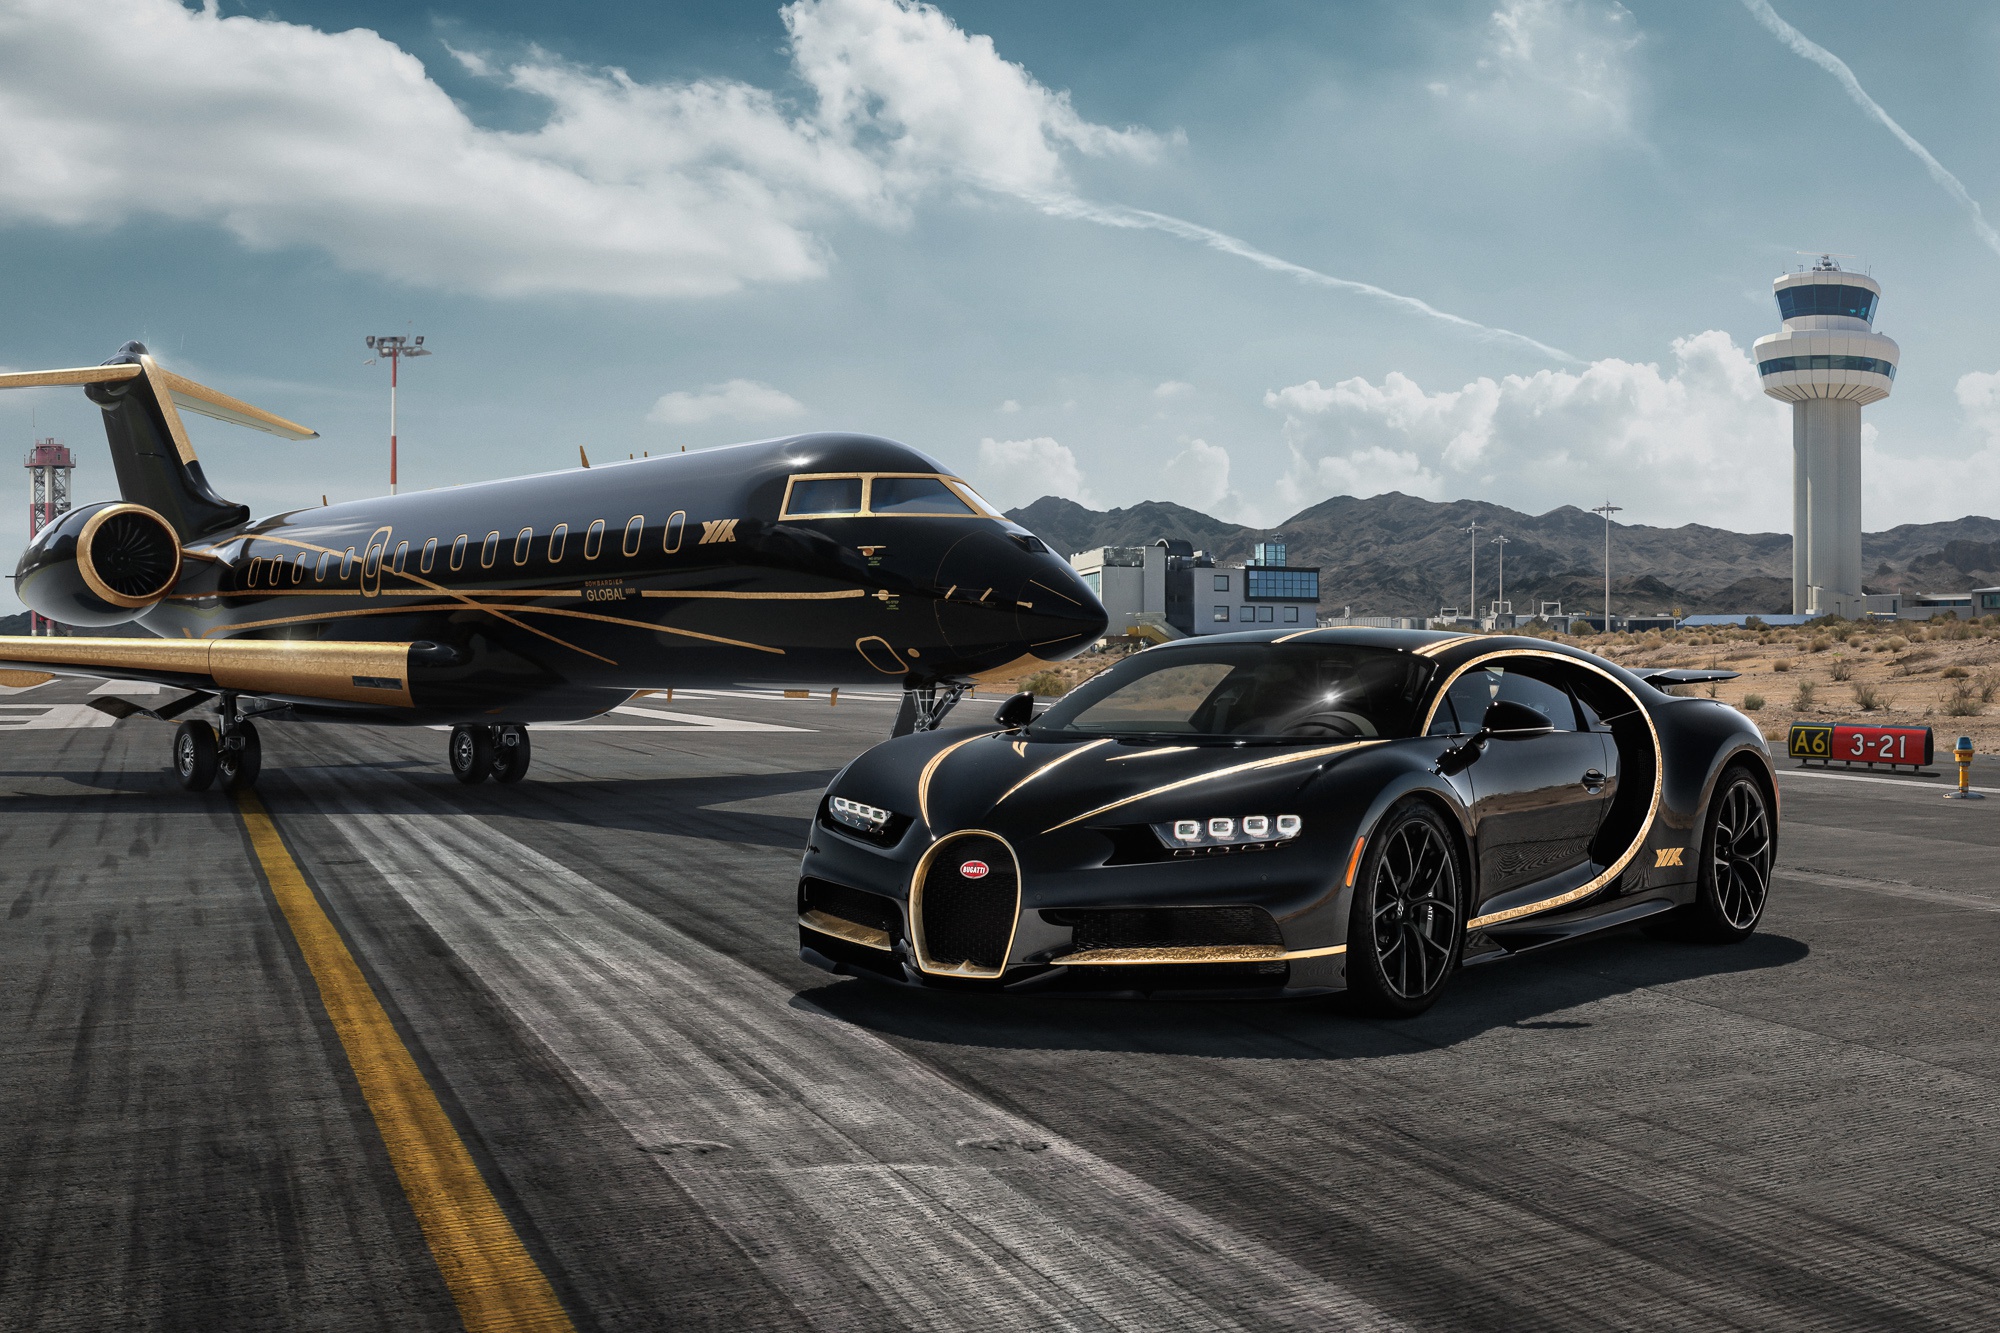 Download Wallpaper airport bugatti chiron supercar aircraft private jet golden and black, 2000x1333